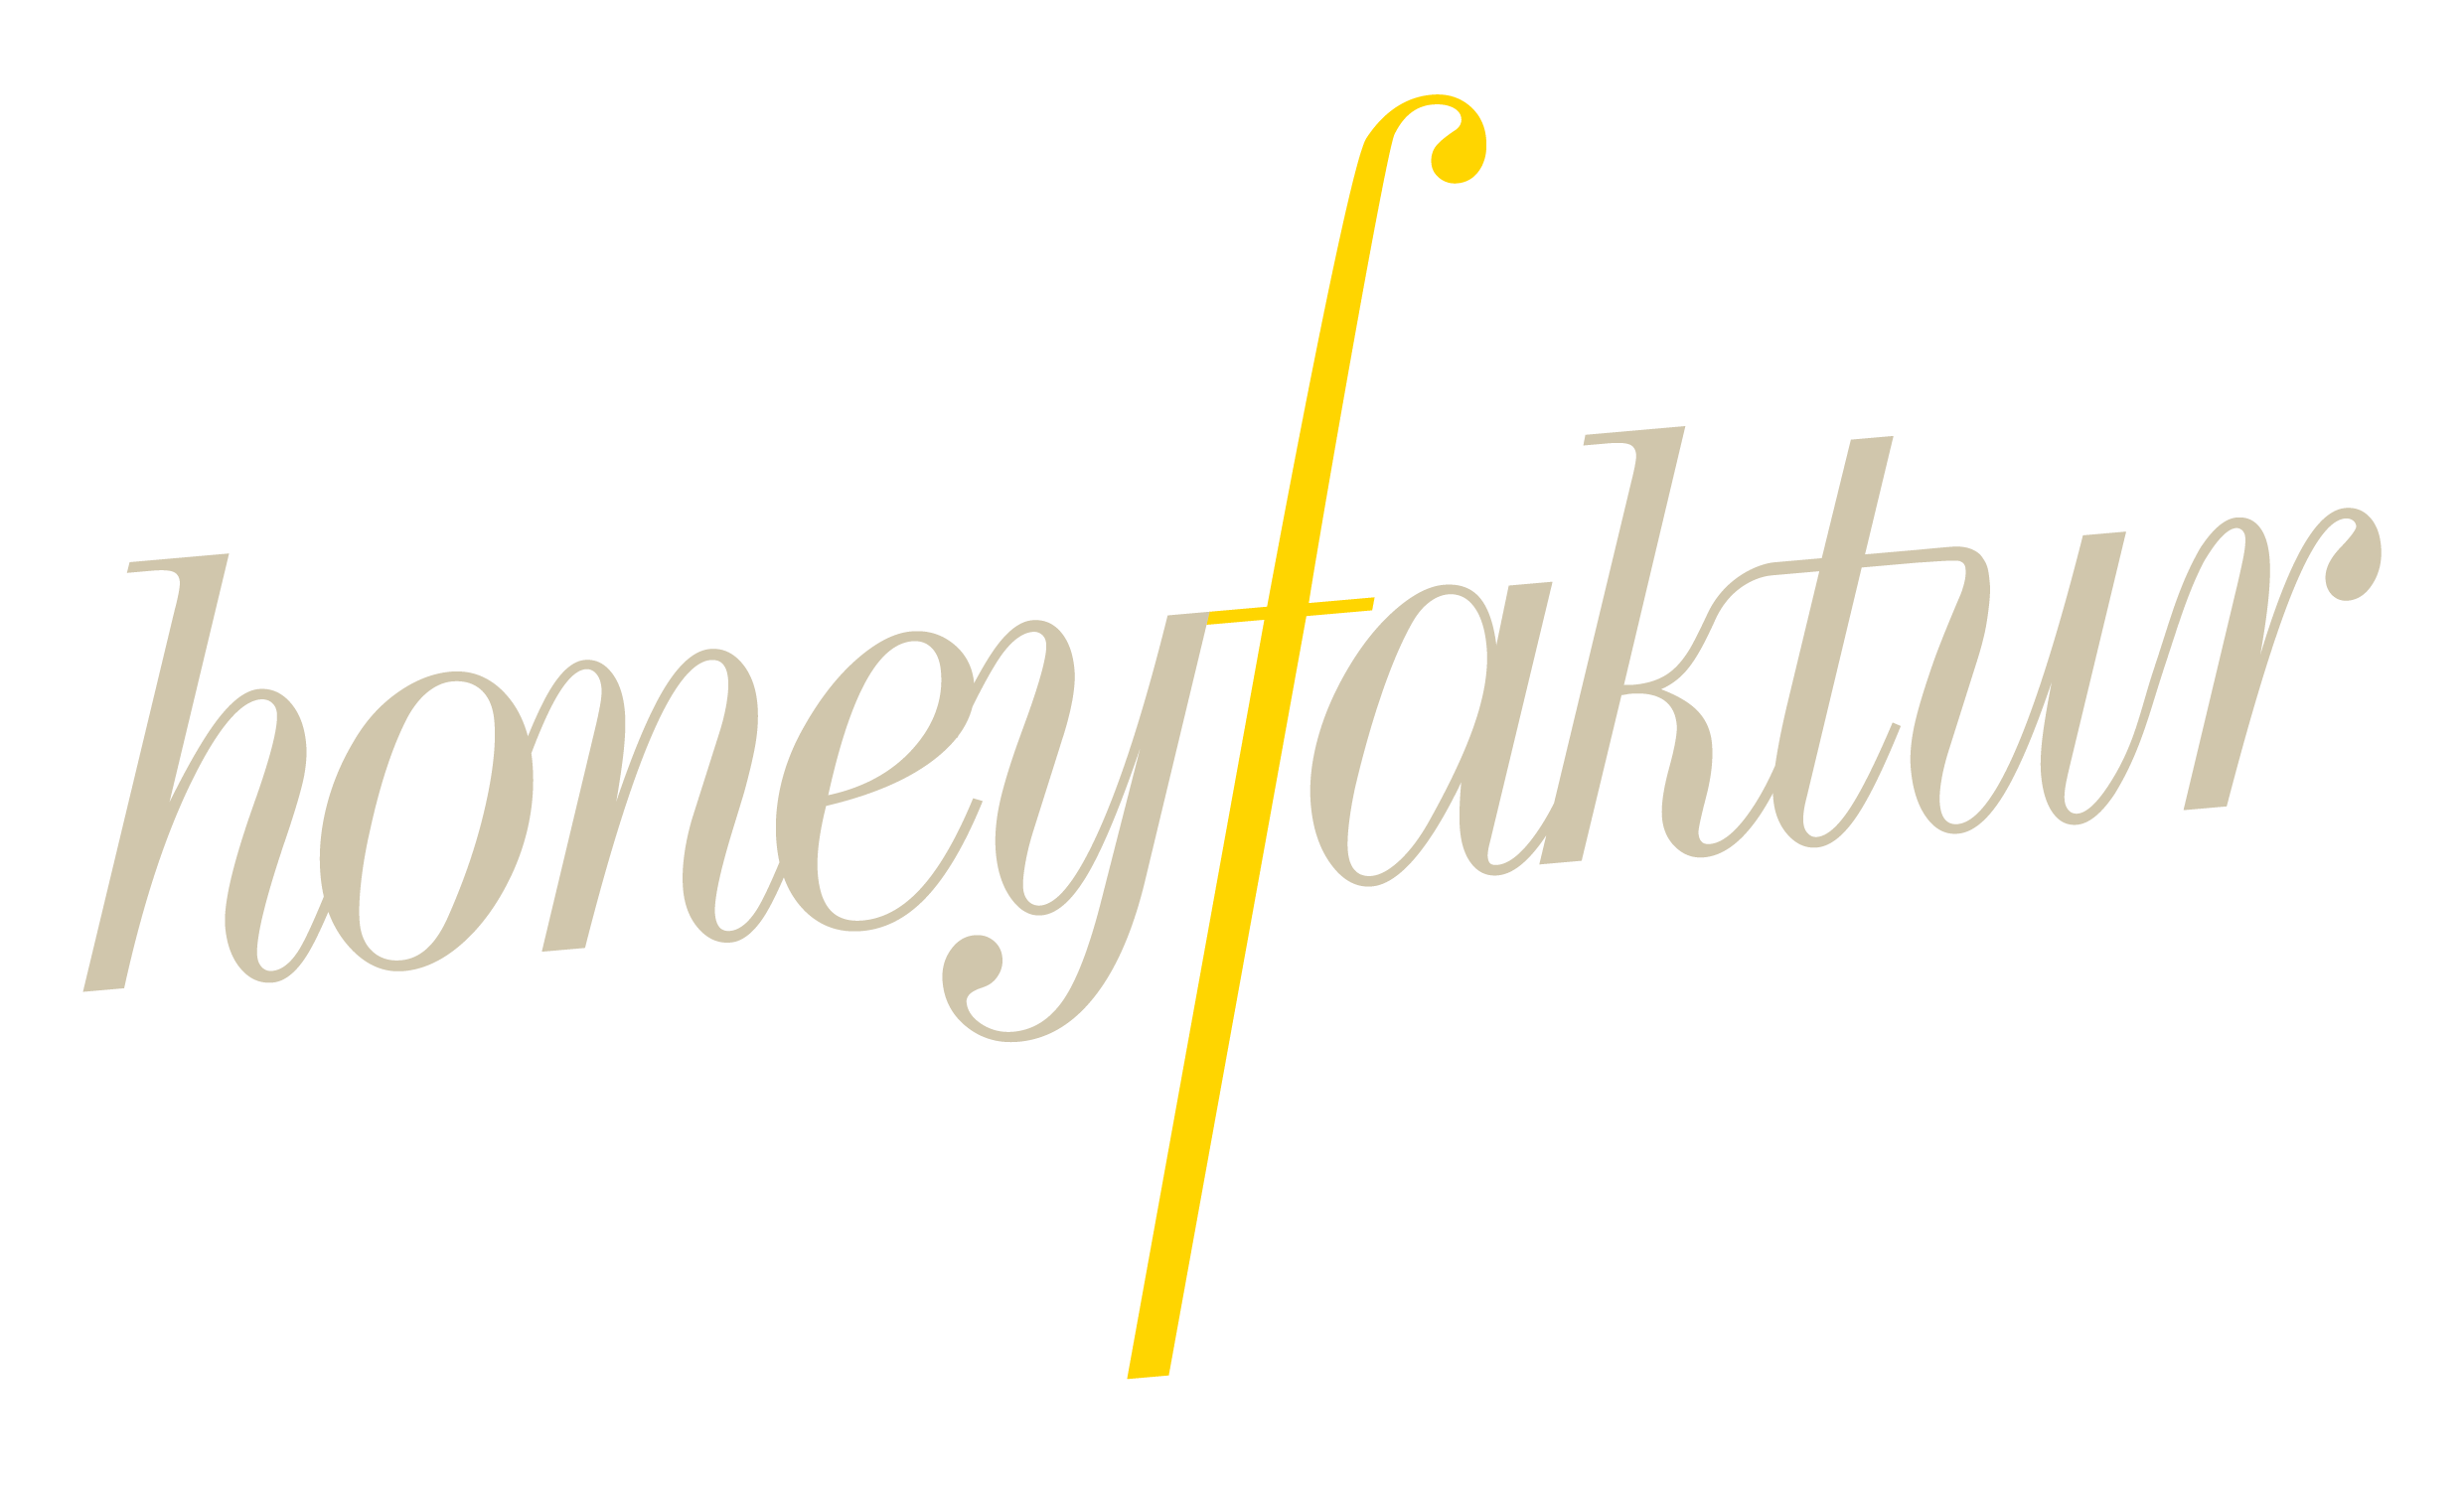 Honeyfaktur